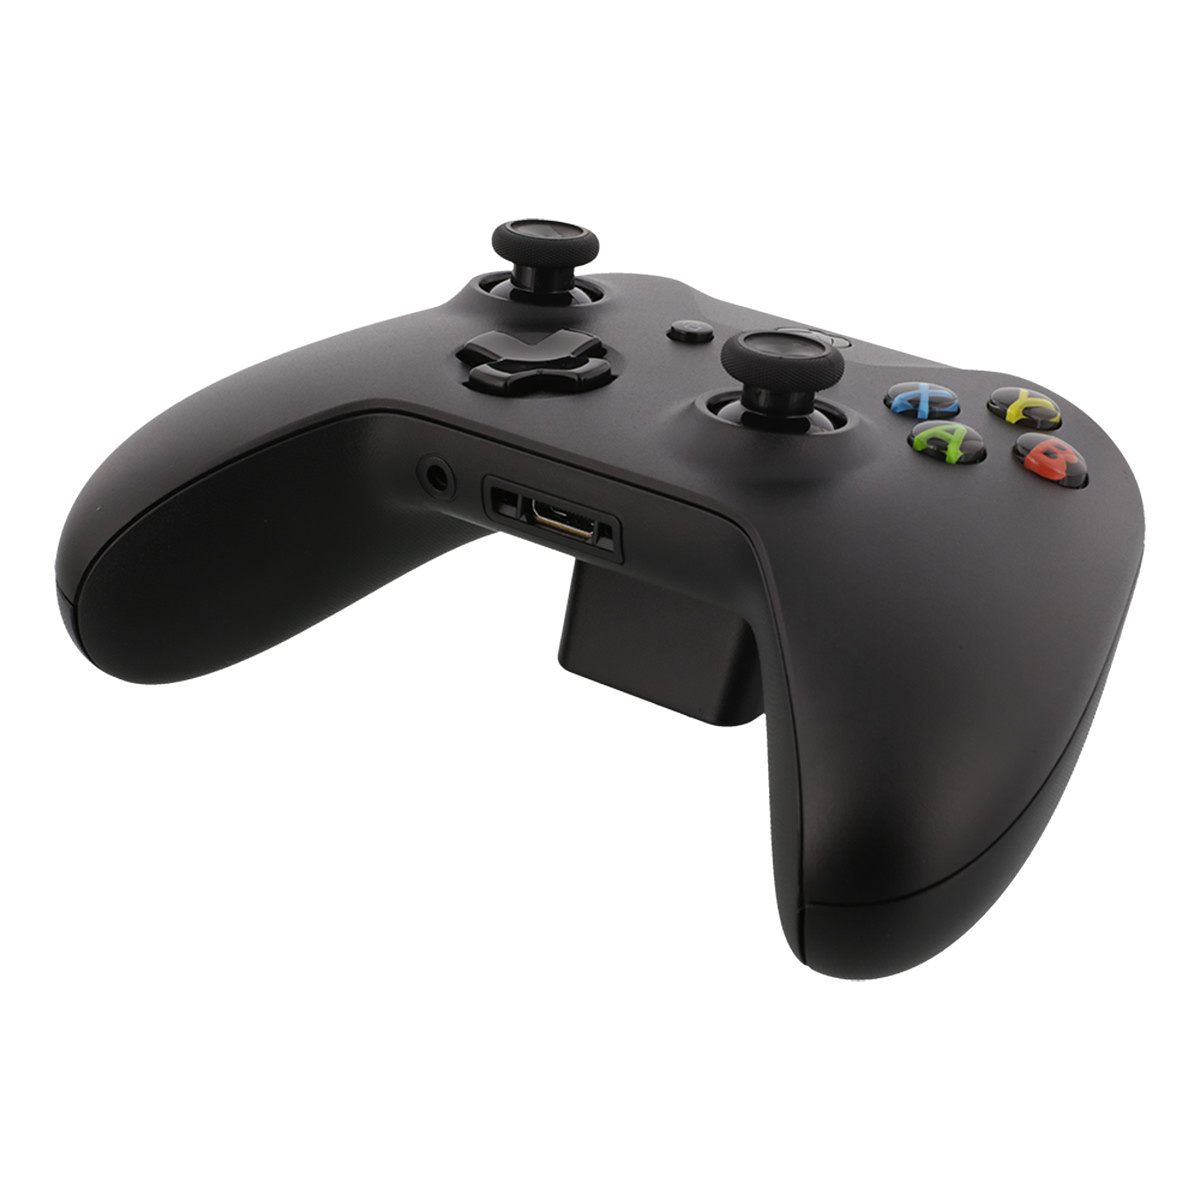 DELTACO GAMING trådlös Qi-receiver till Xbox One kontollers, svart